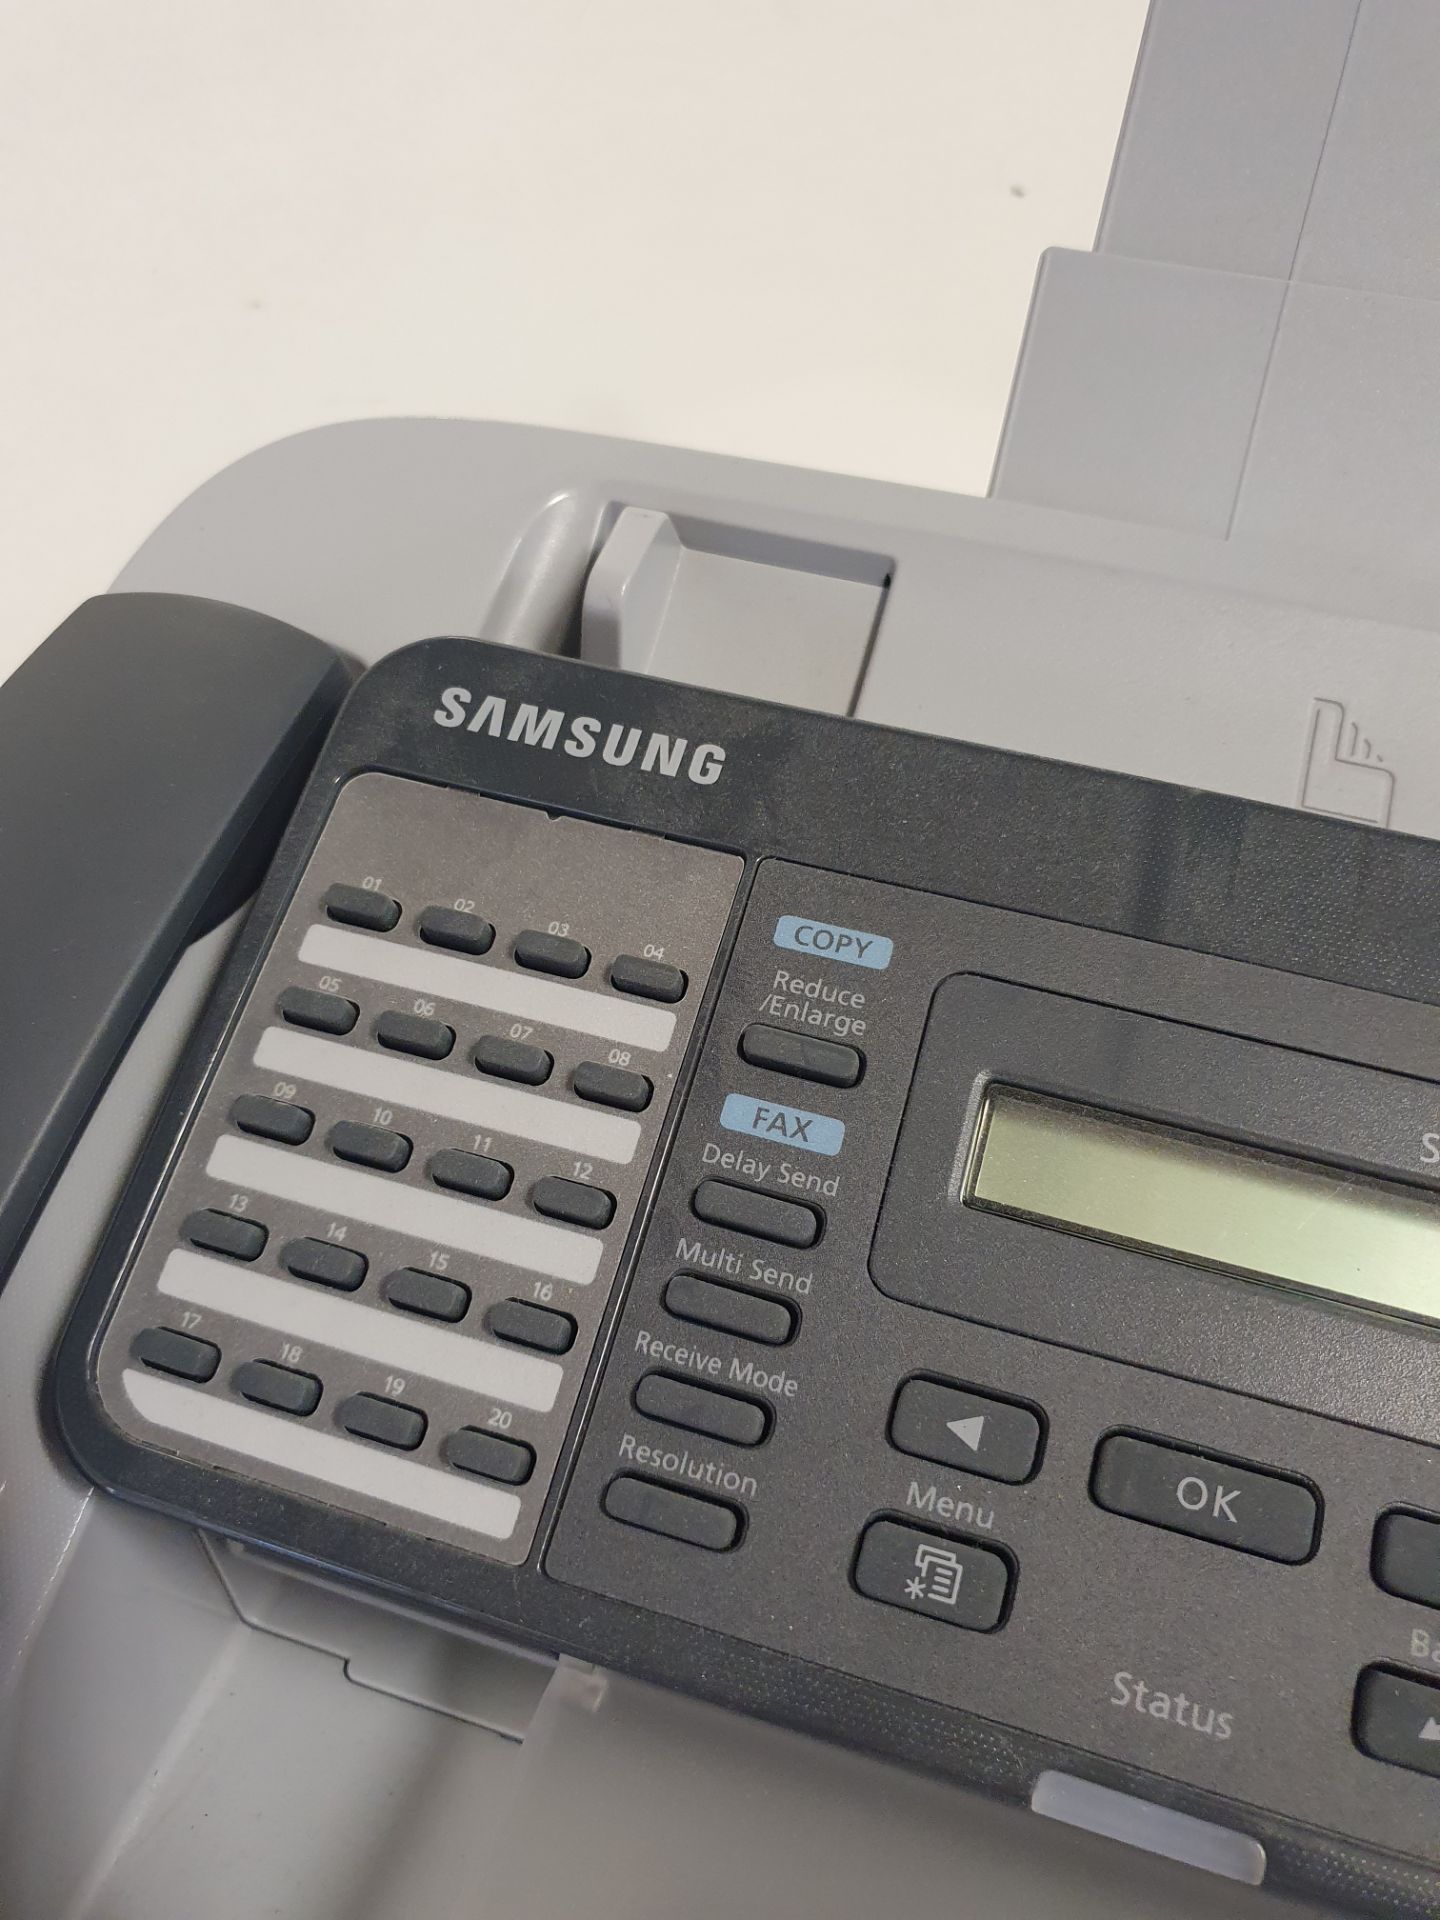 Samsung Fax Machine | SF-650 - Image 2 of 4